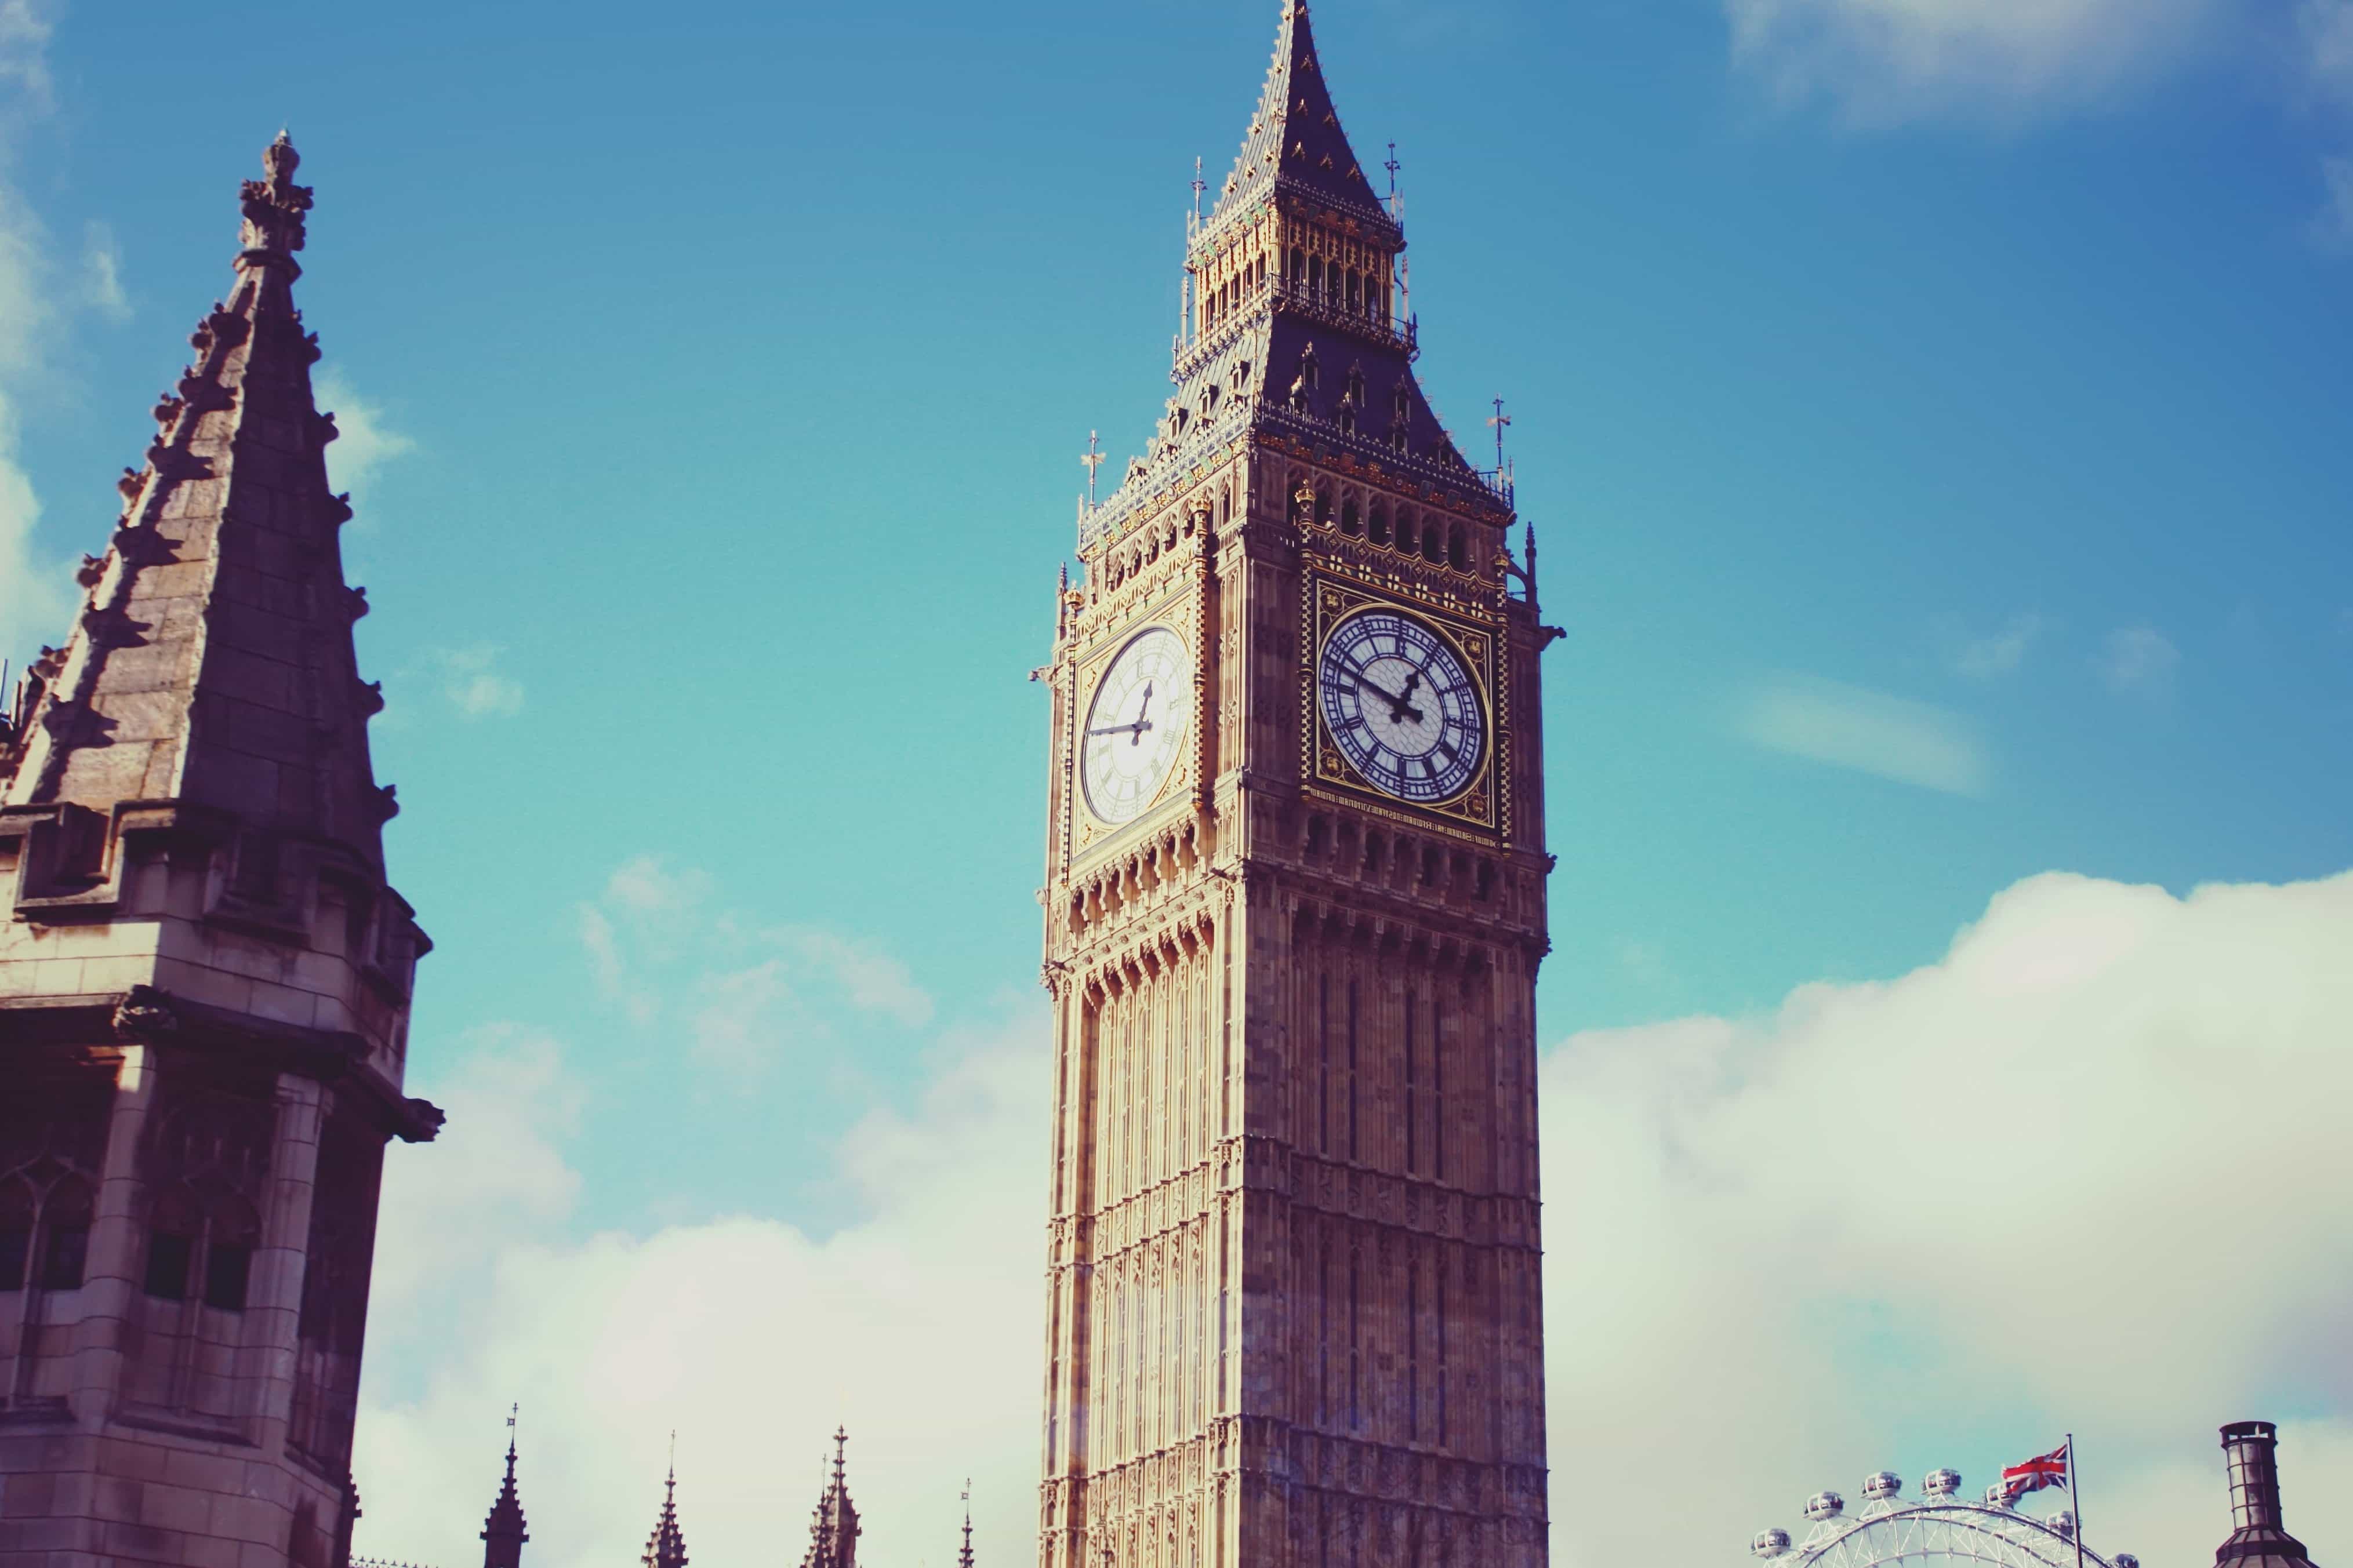 Free picture: architecture, England, London, parliament, clock ...